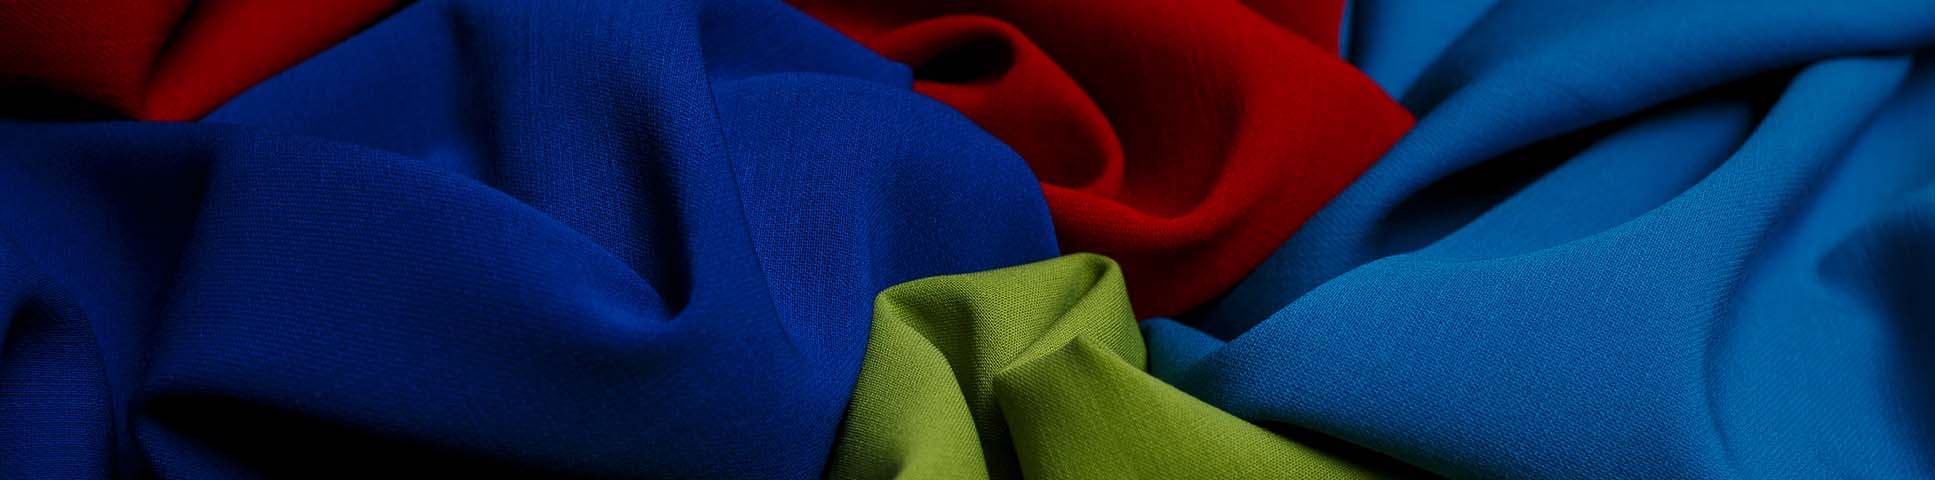 wool fabrics